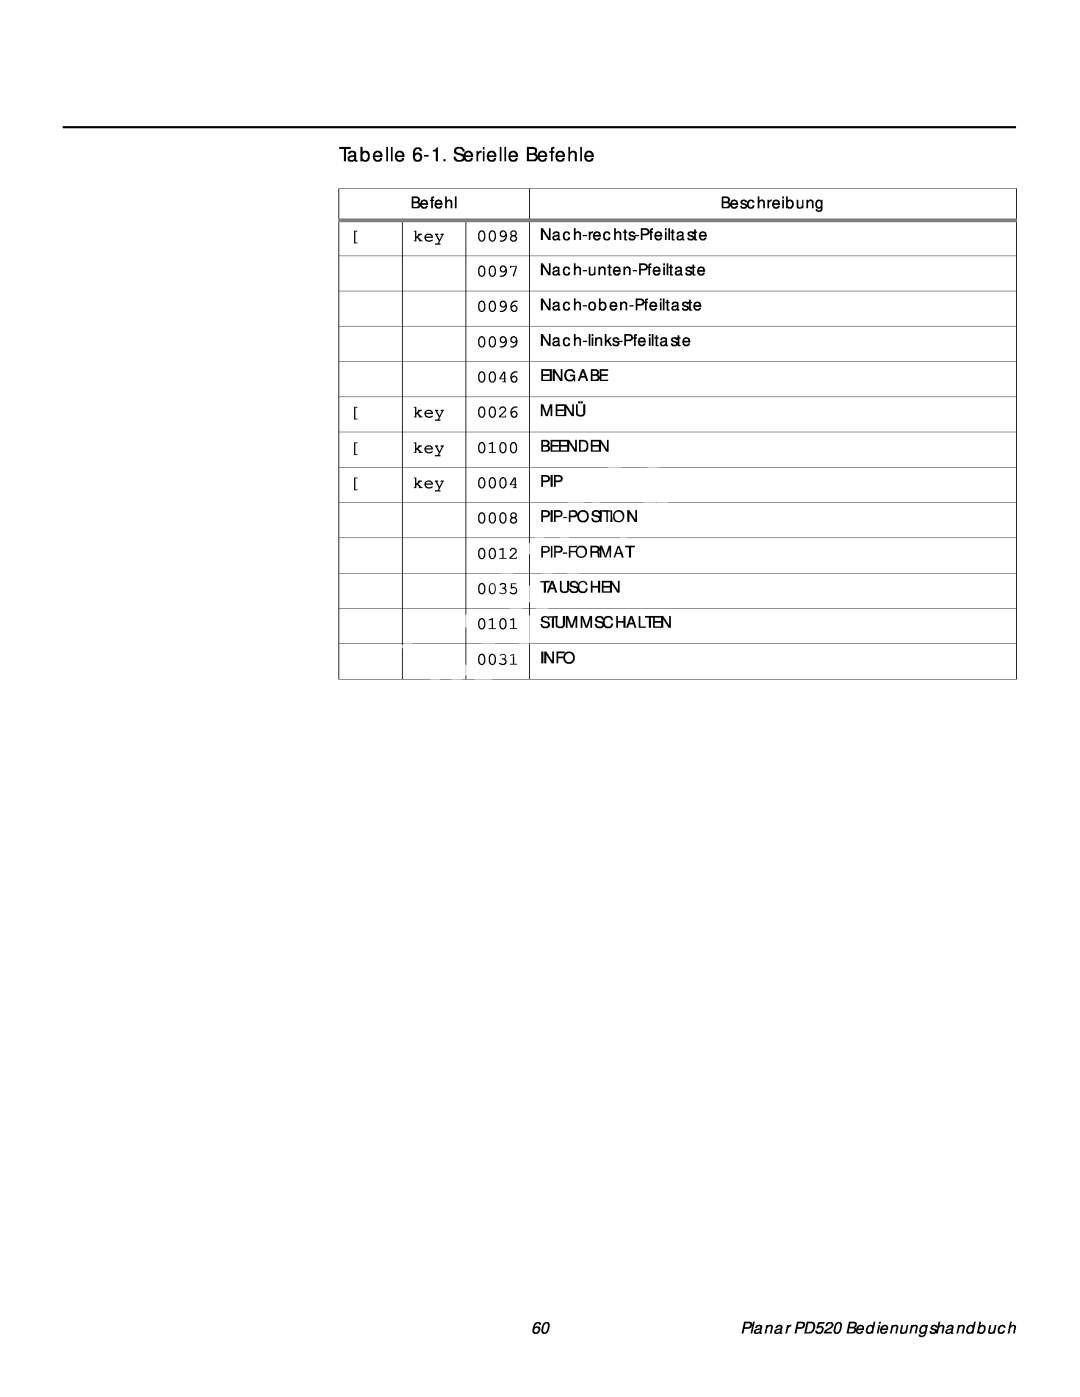 Planar PD520 manual Tabelle 6-1.Serielle Befehle, 0098 